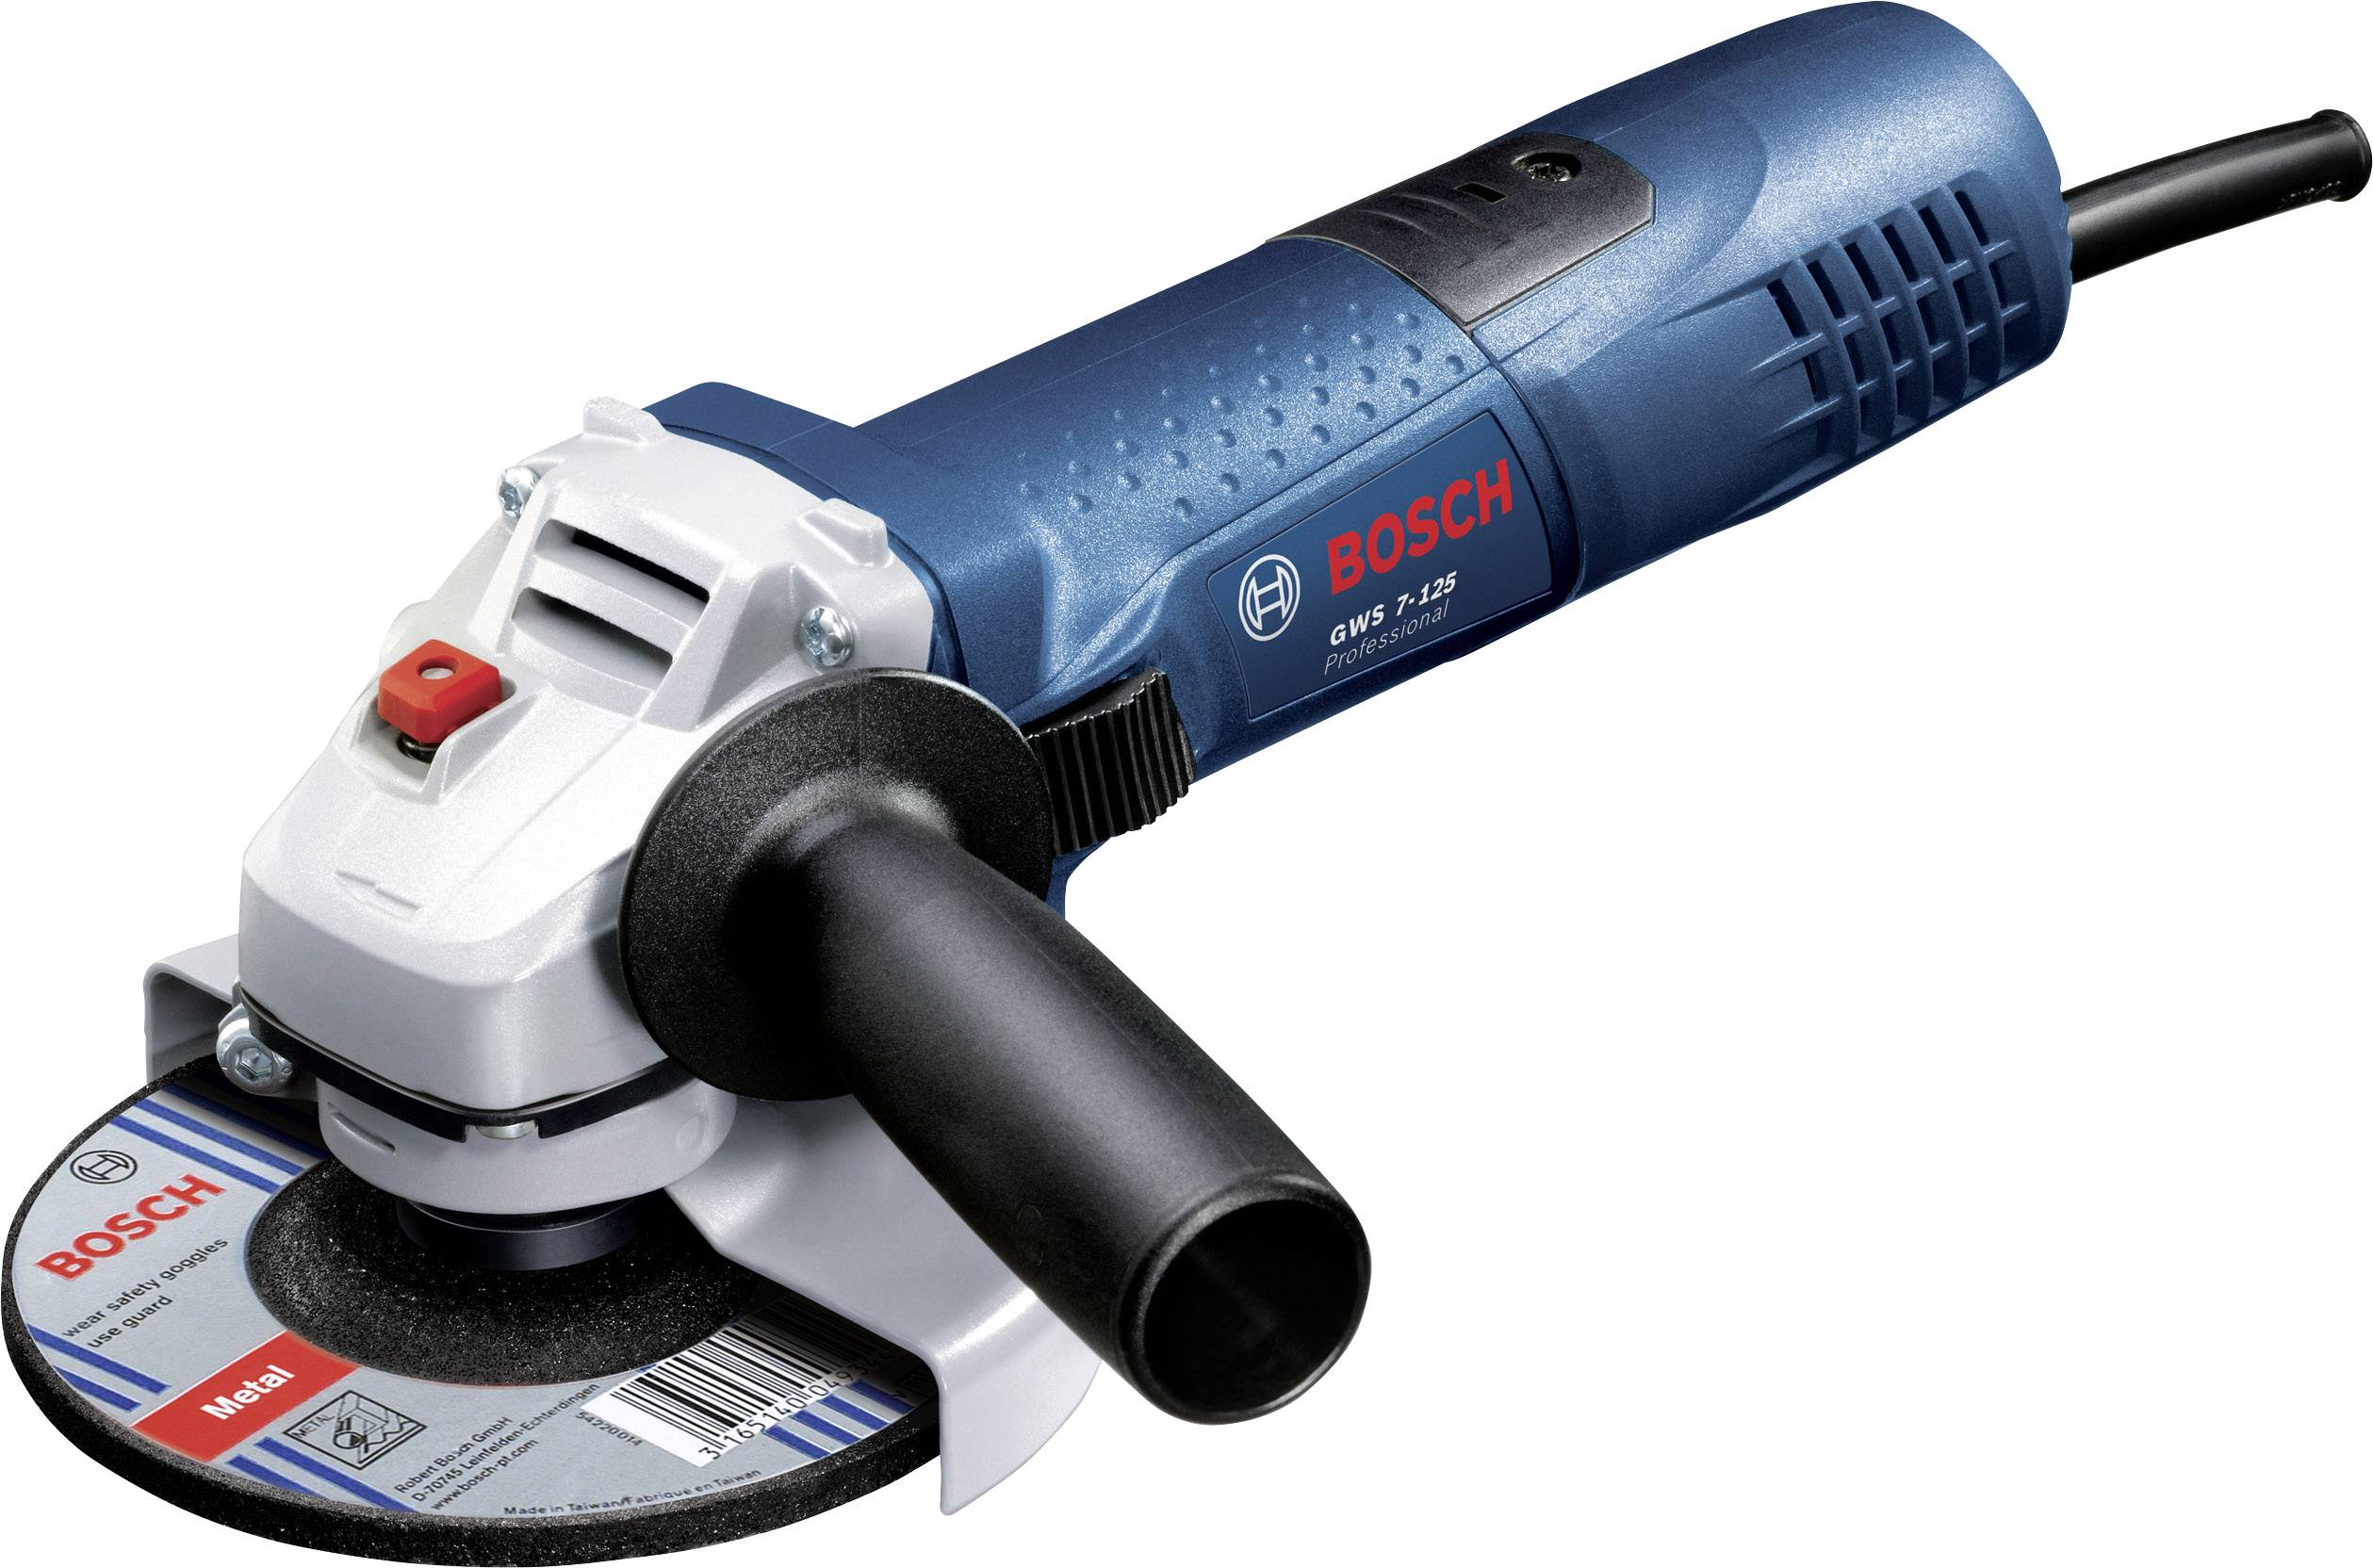 Professional GWS 7-125 Angle grinder 125 mm 720 W 230 V | Conrad.com